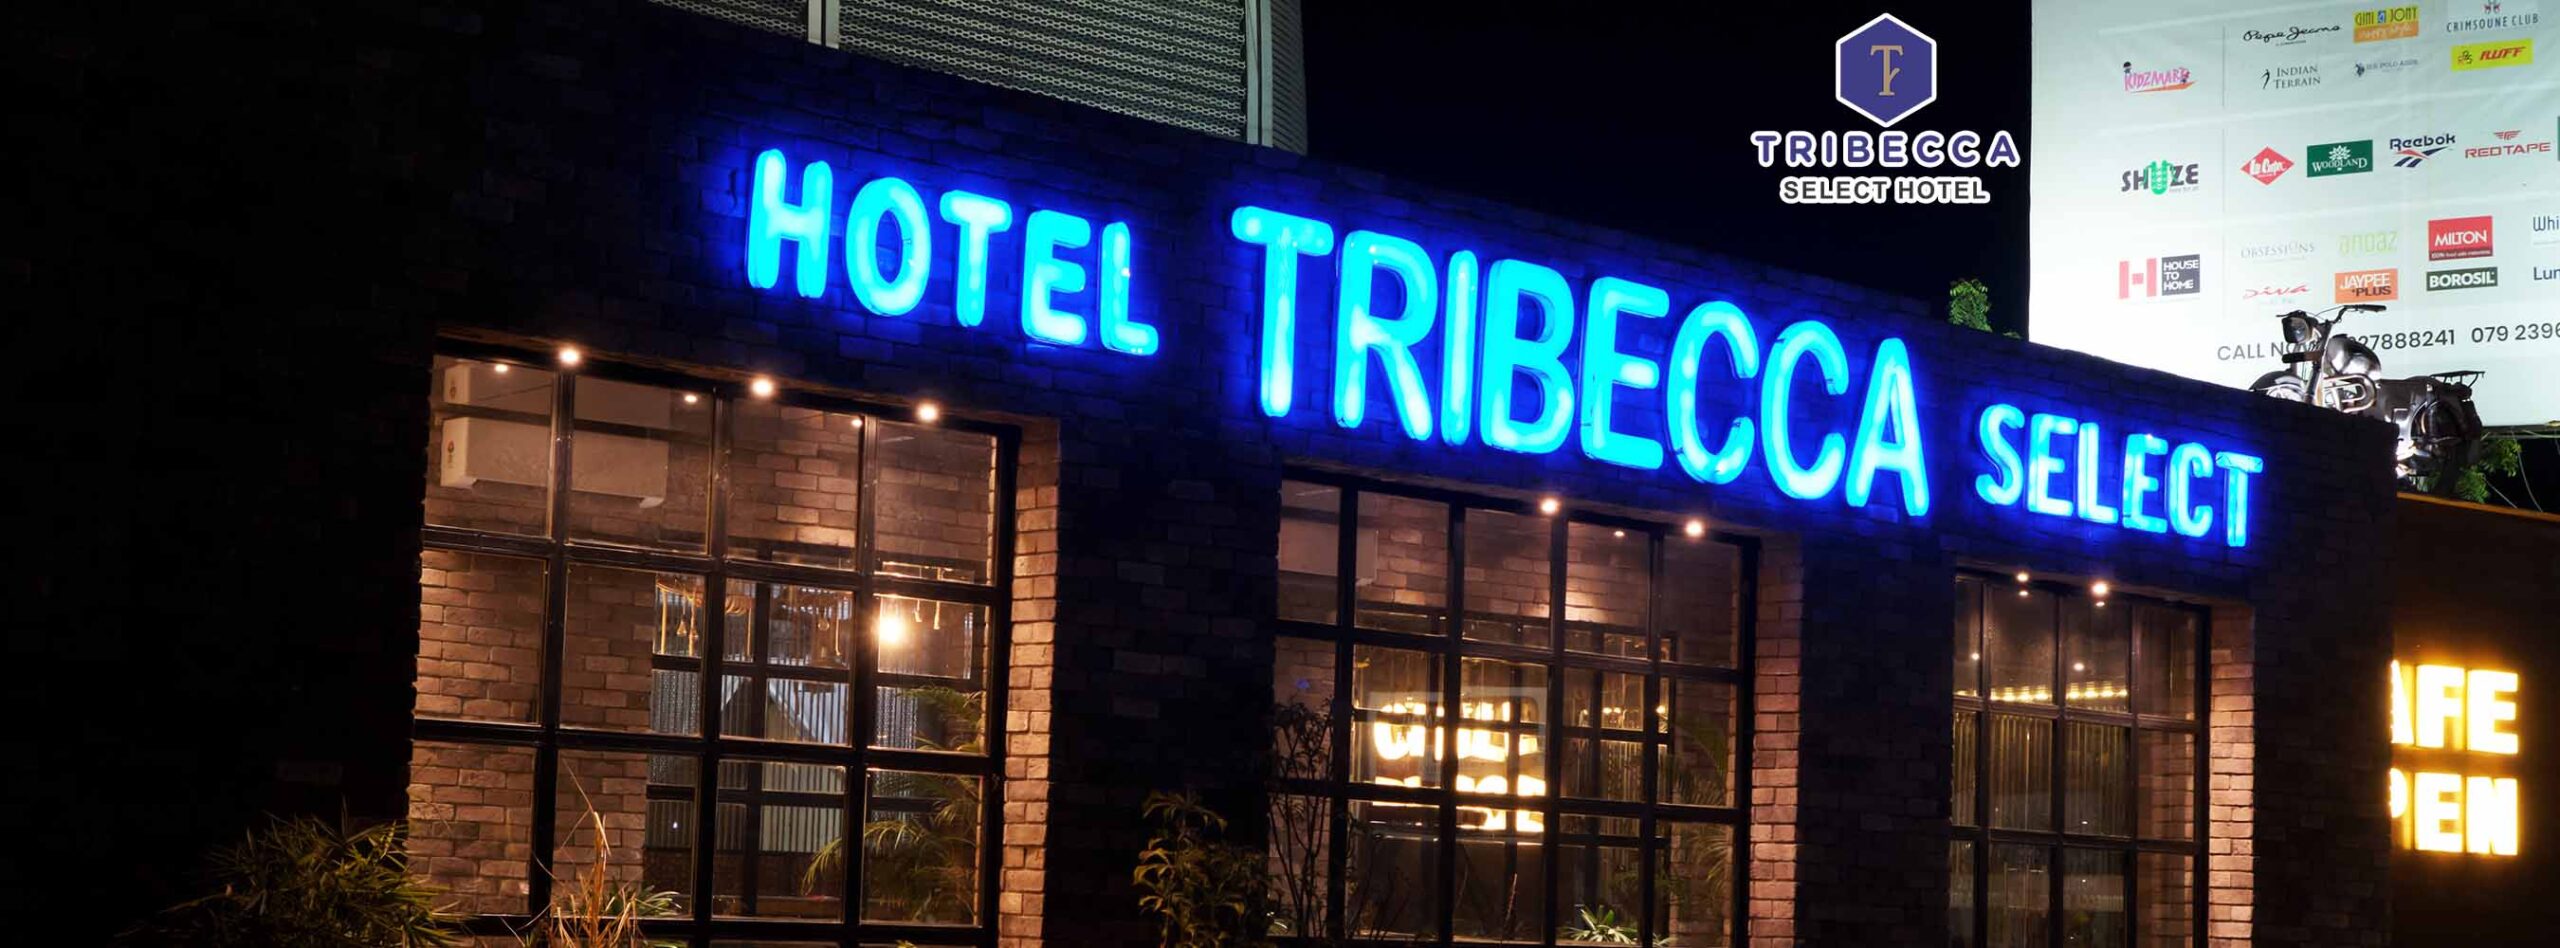 Tribecca Hotel